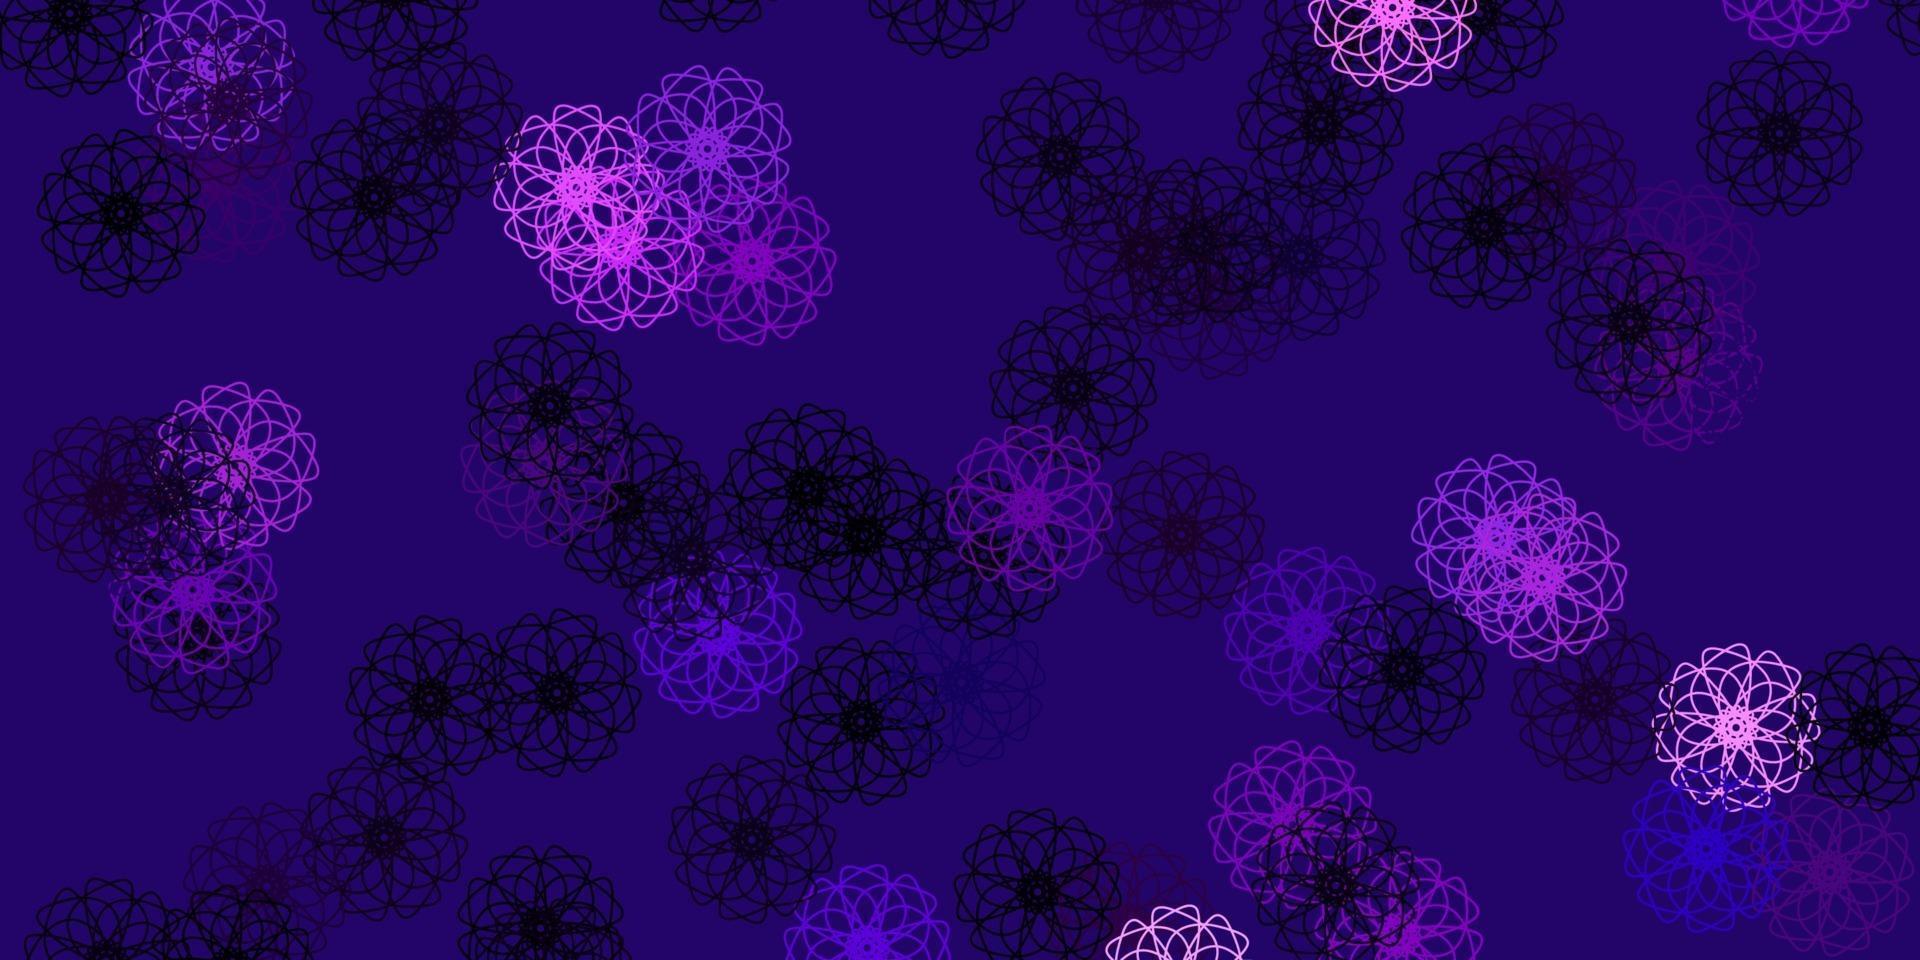 patrón de doodle de vector púrpura claro con flores.